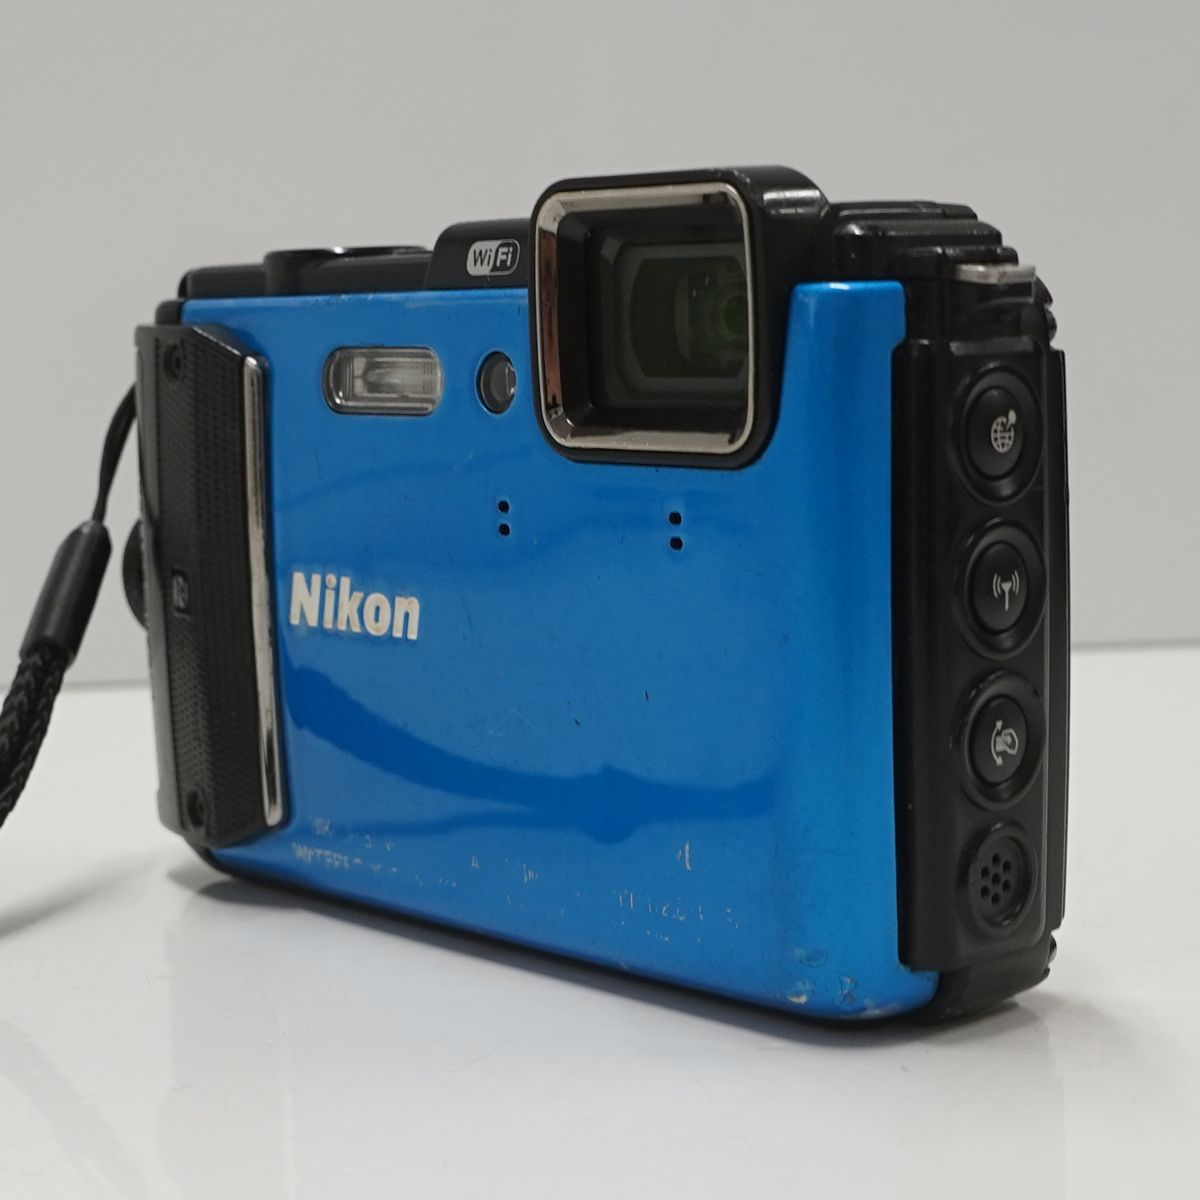 Nikon COOLPIX AW130 USED品 デジタルカメラ 本体+バッテリー 防水 Wi-Fi GPS アウトドア 耐衝撃 タフ 5倍ズーム 完動品  CP3011